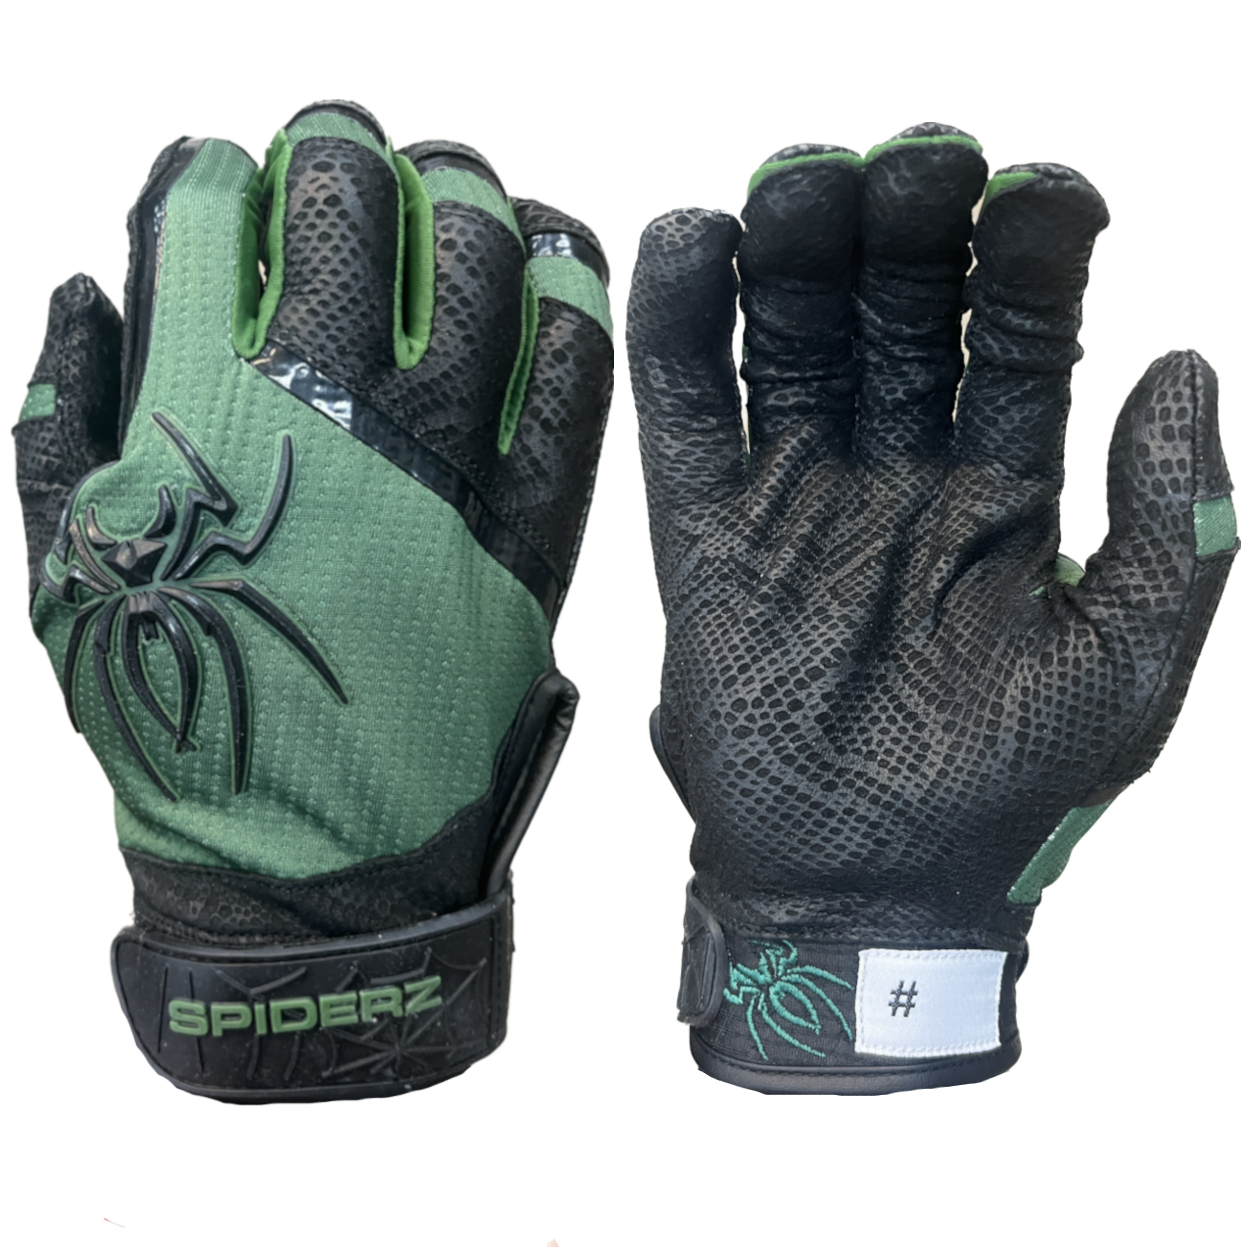 2024 Spiderz PRO Batting Gloves - Black/Military Green